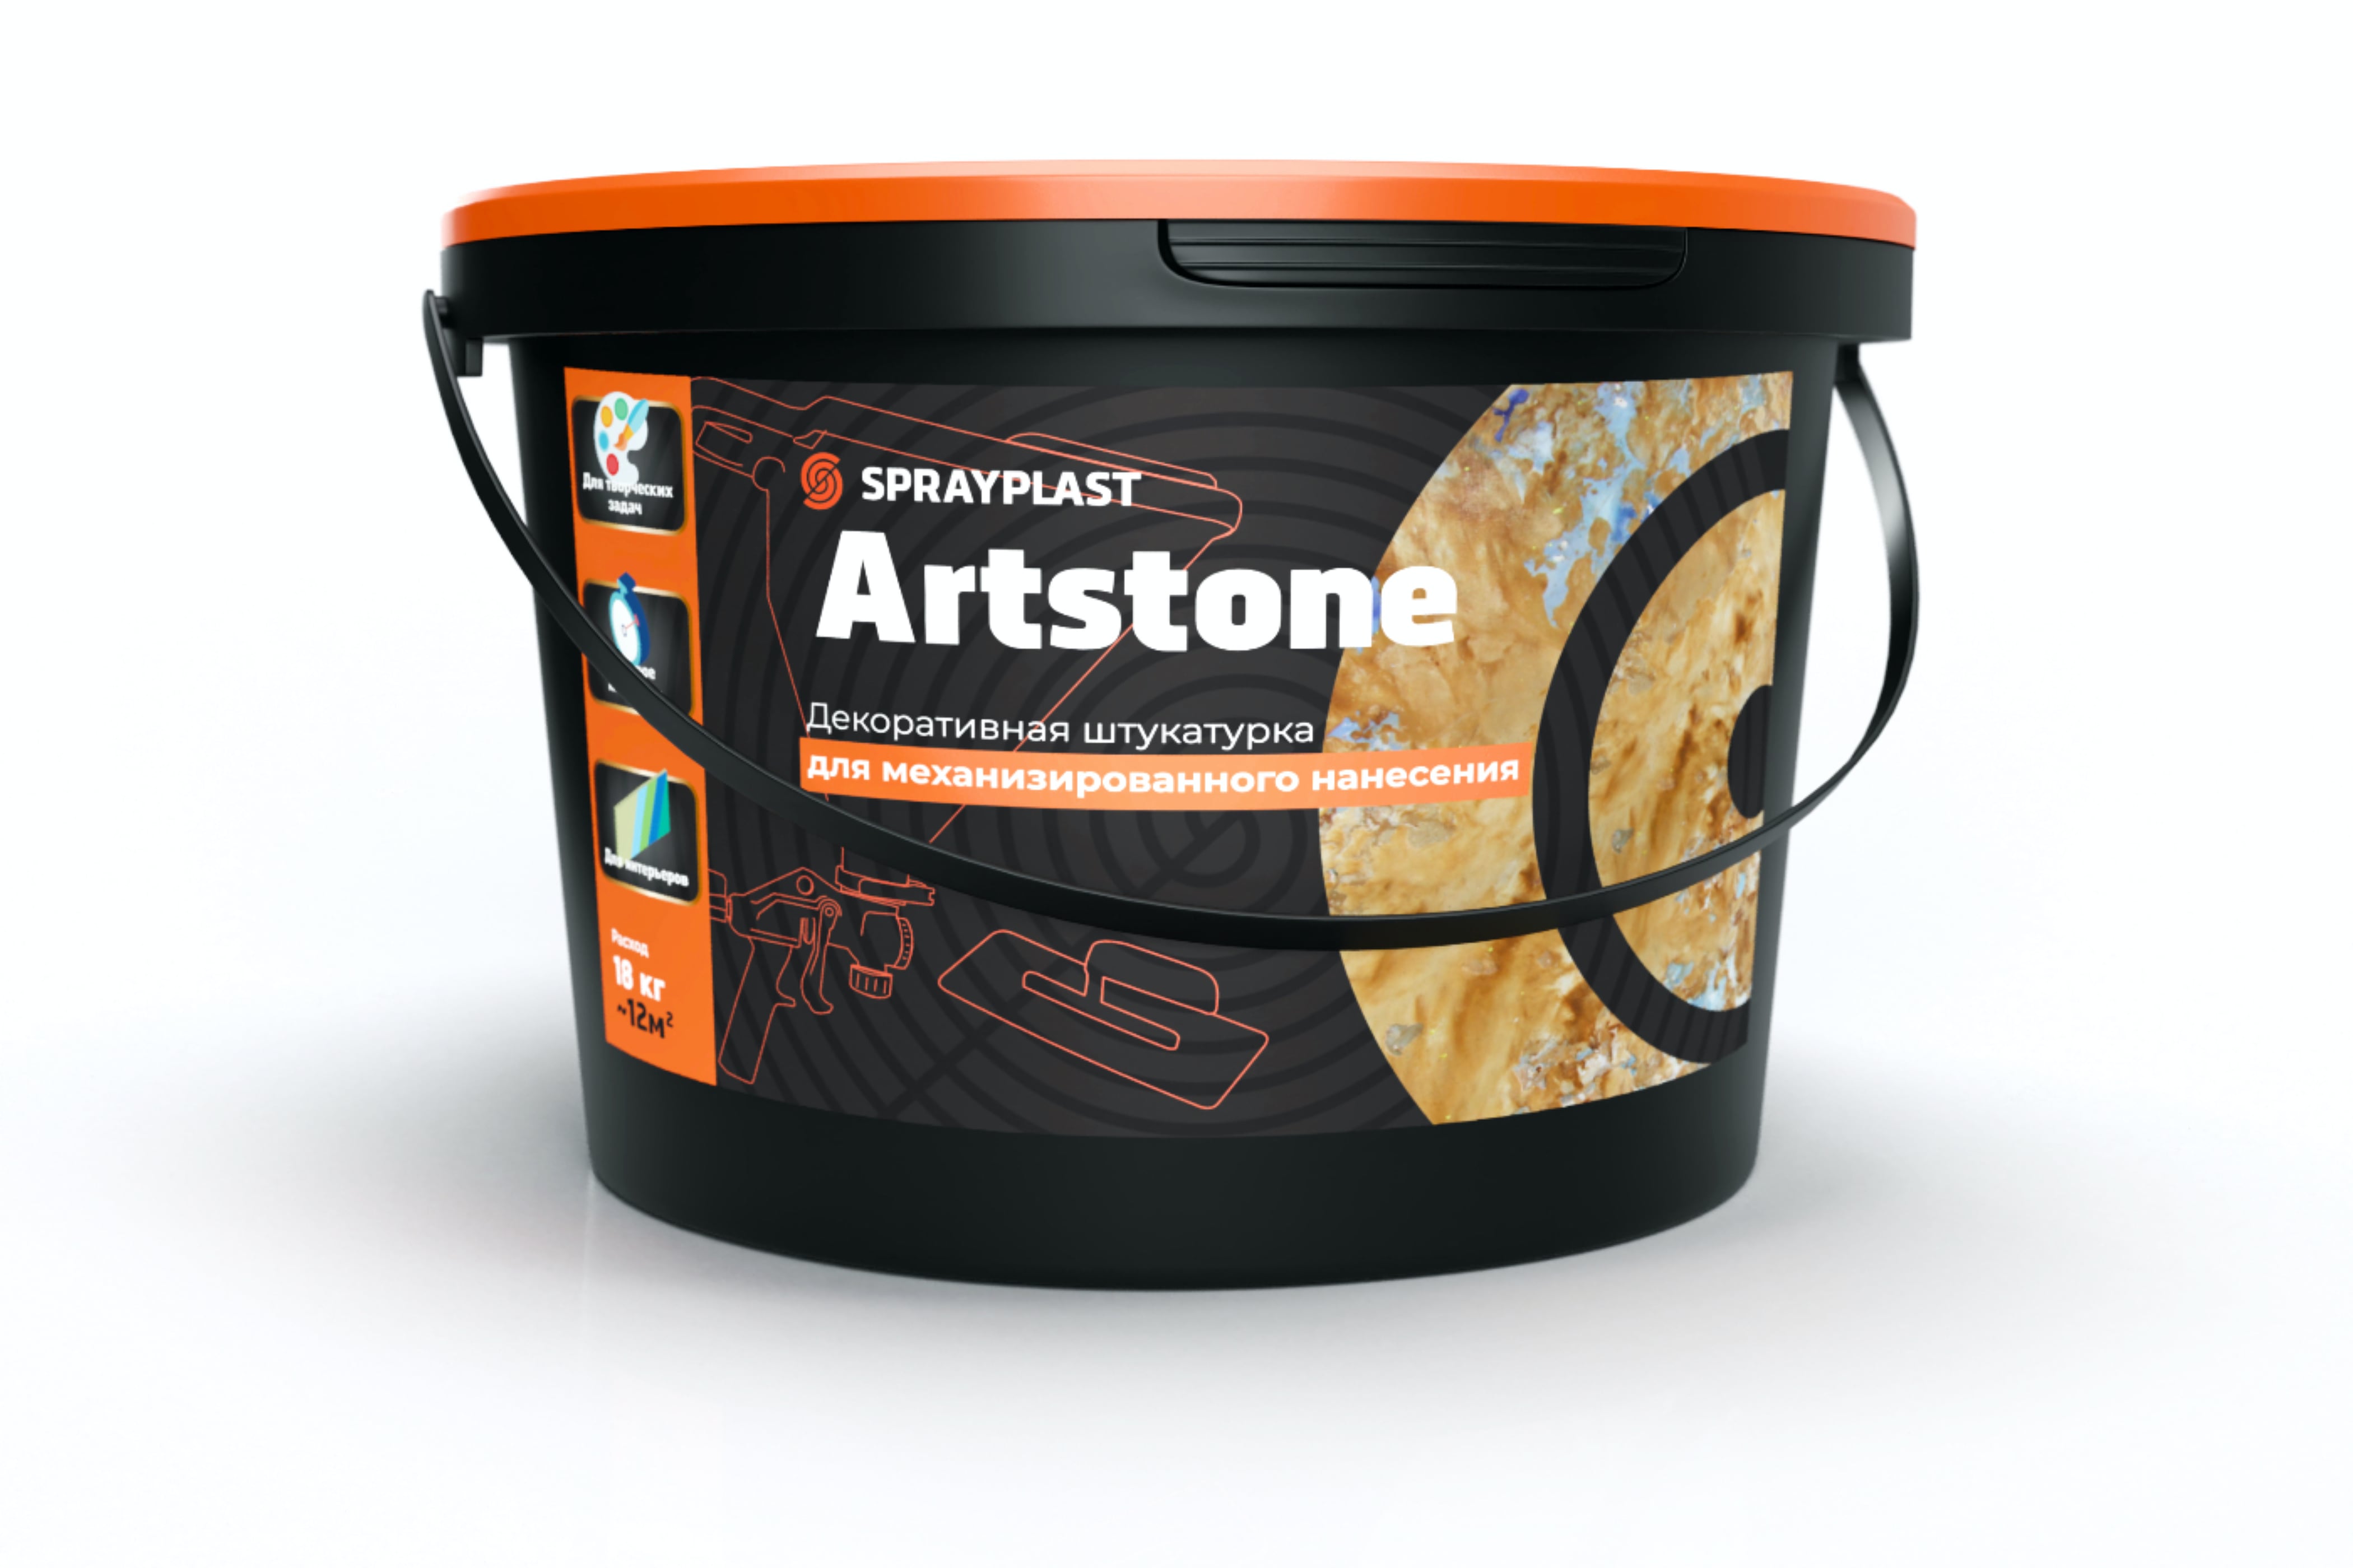 Artstone